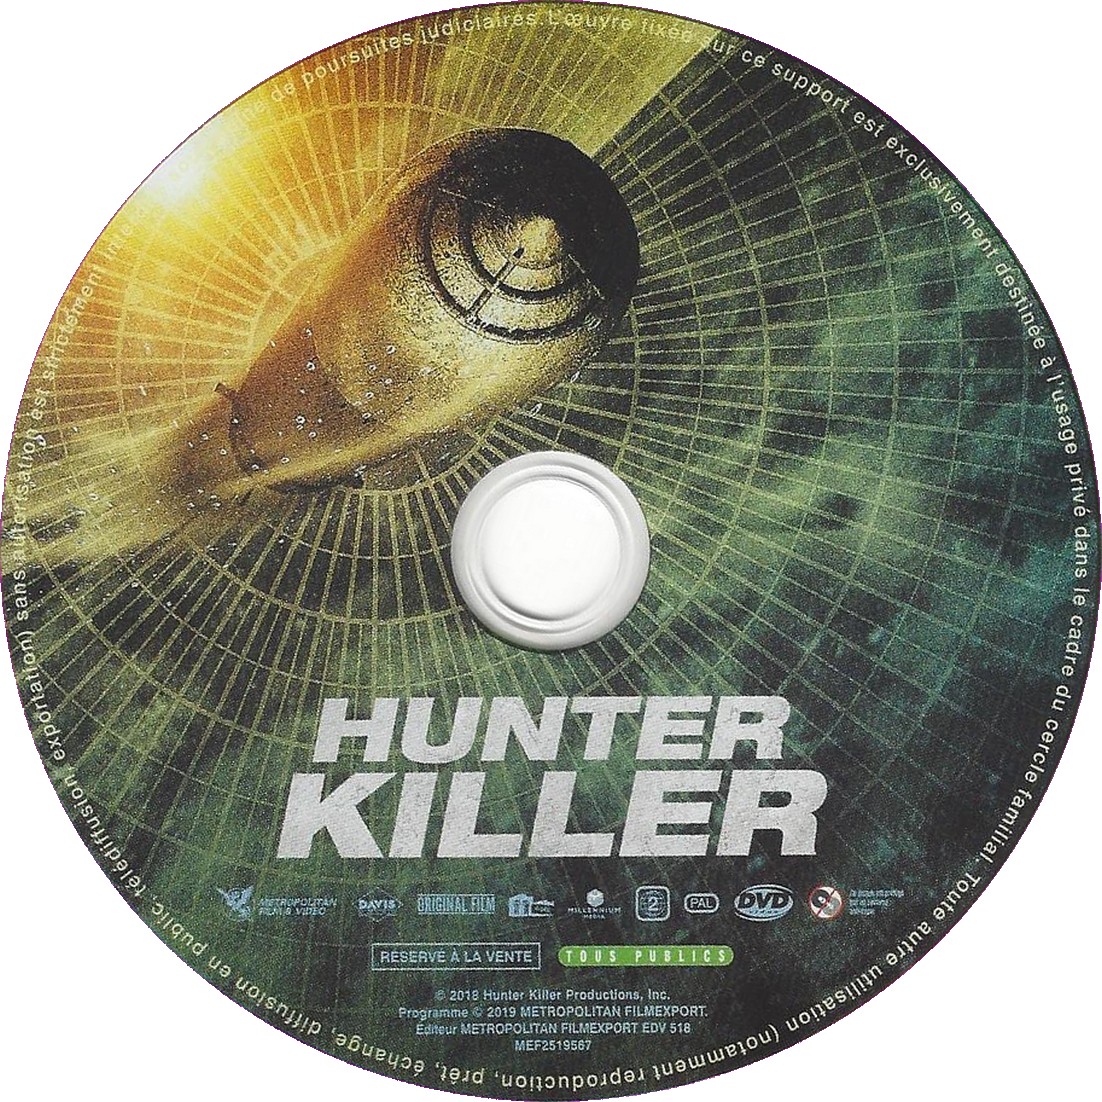 Hunter killer